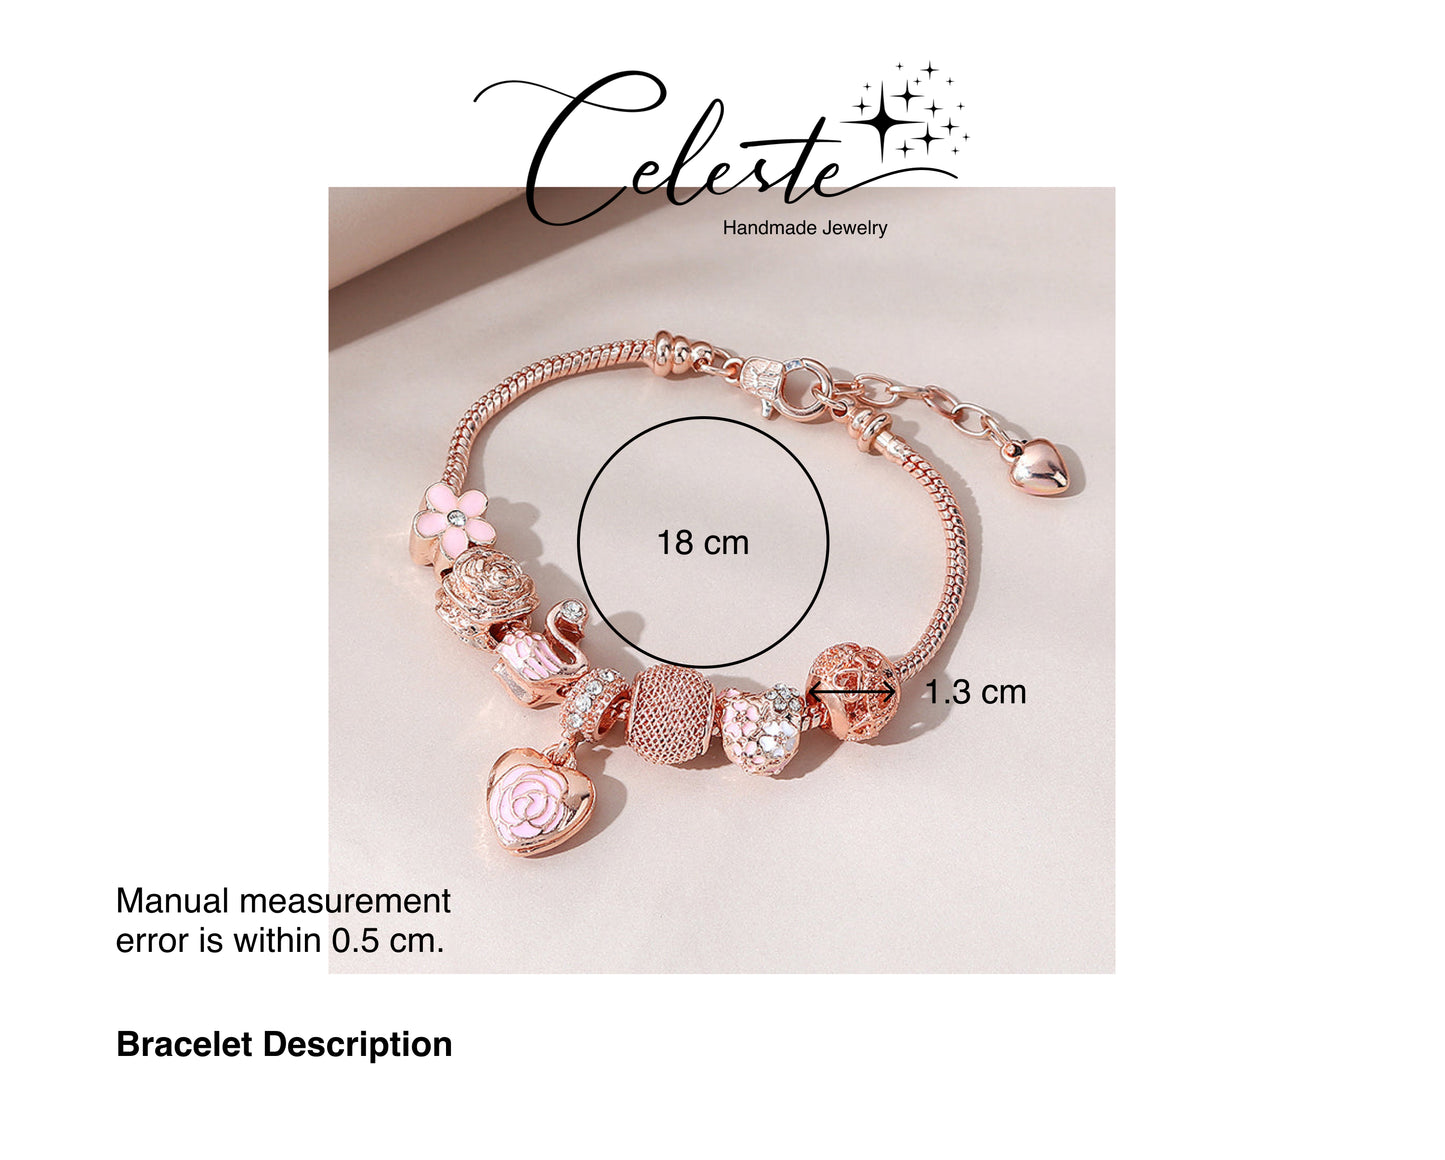 V - Beautiful Pink Color Oil Dripping Diamond Bead Flower Bracelet Adjustable Snake Chain Crystal Flower Love Heart Charm Bracelet